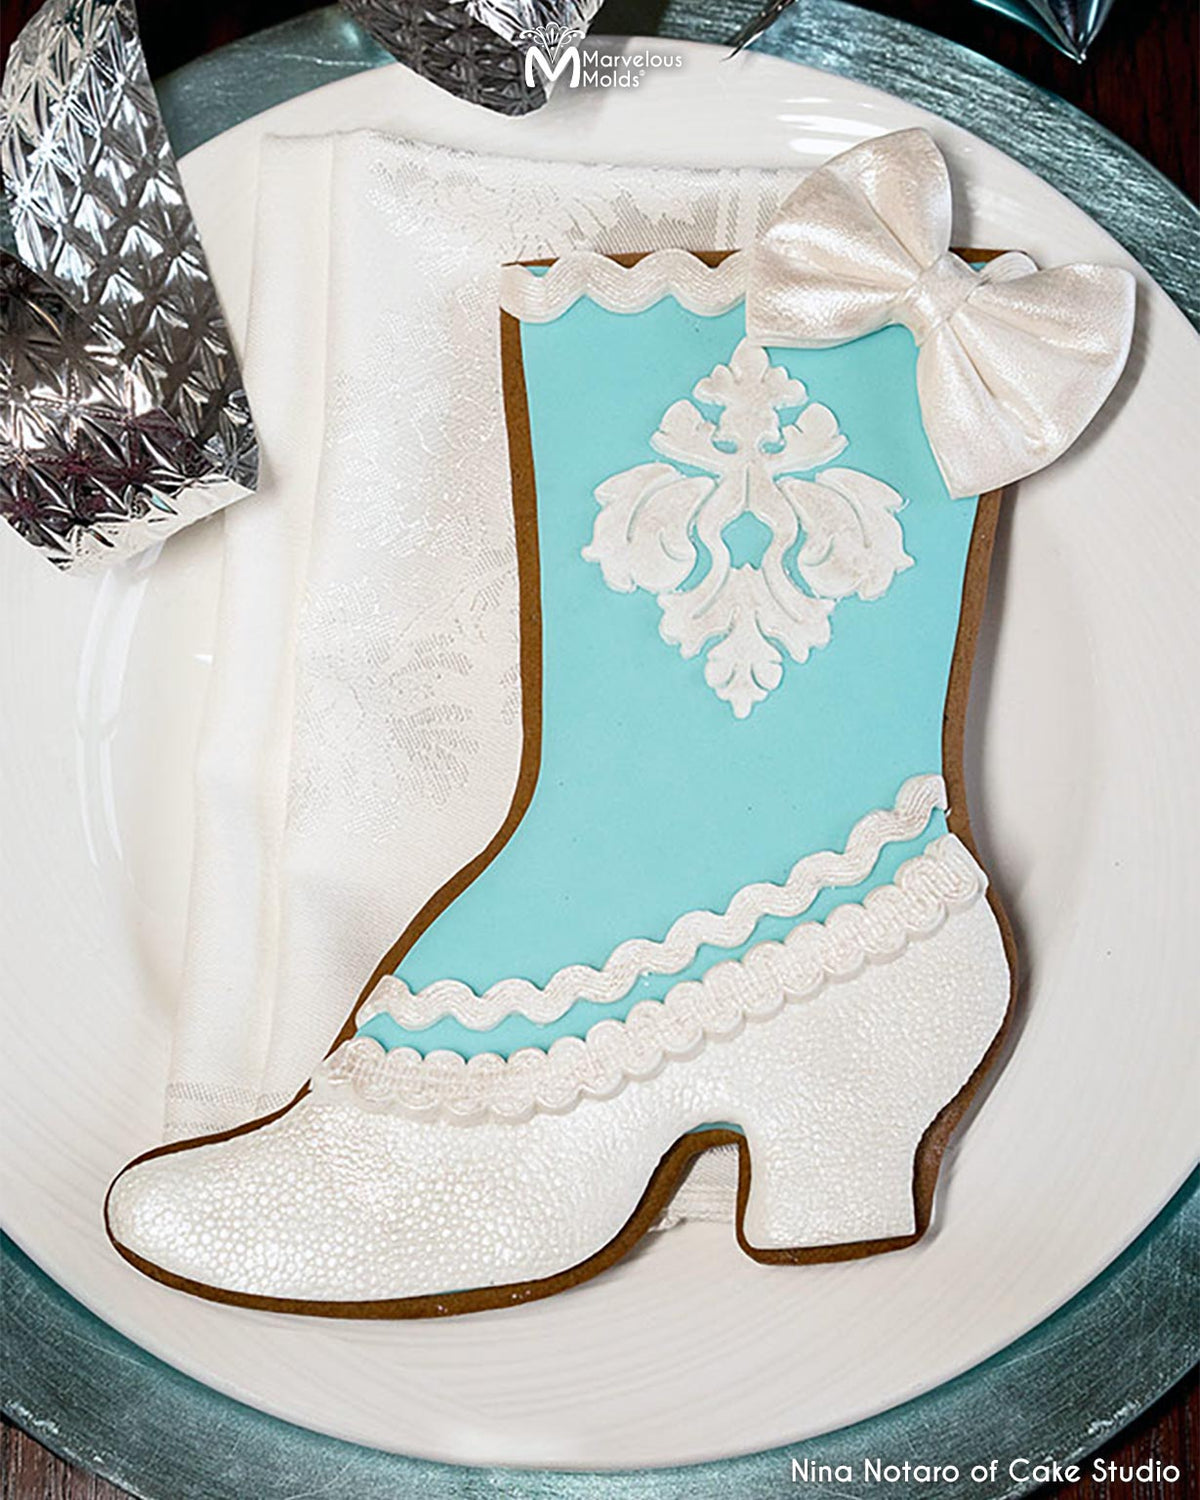 Shoe shaped cookie decorated using Marvelous Molds Damask Medallion Silicone Onlay